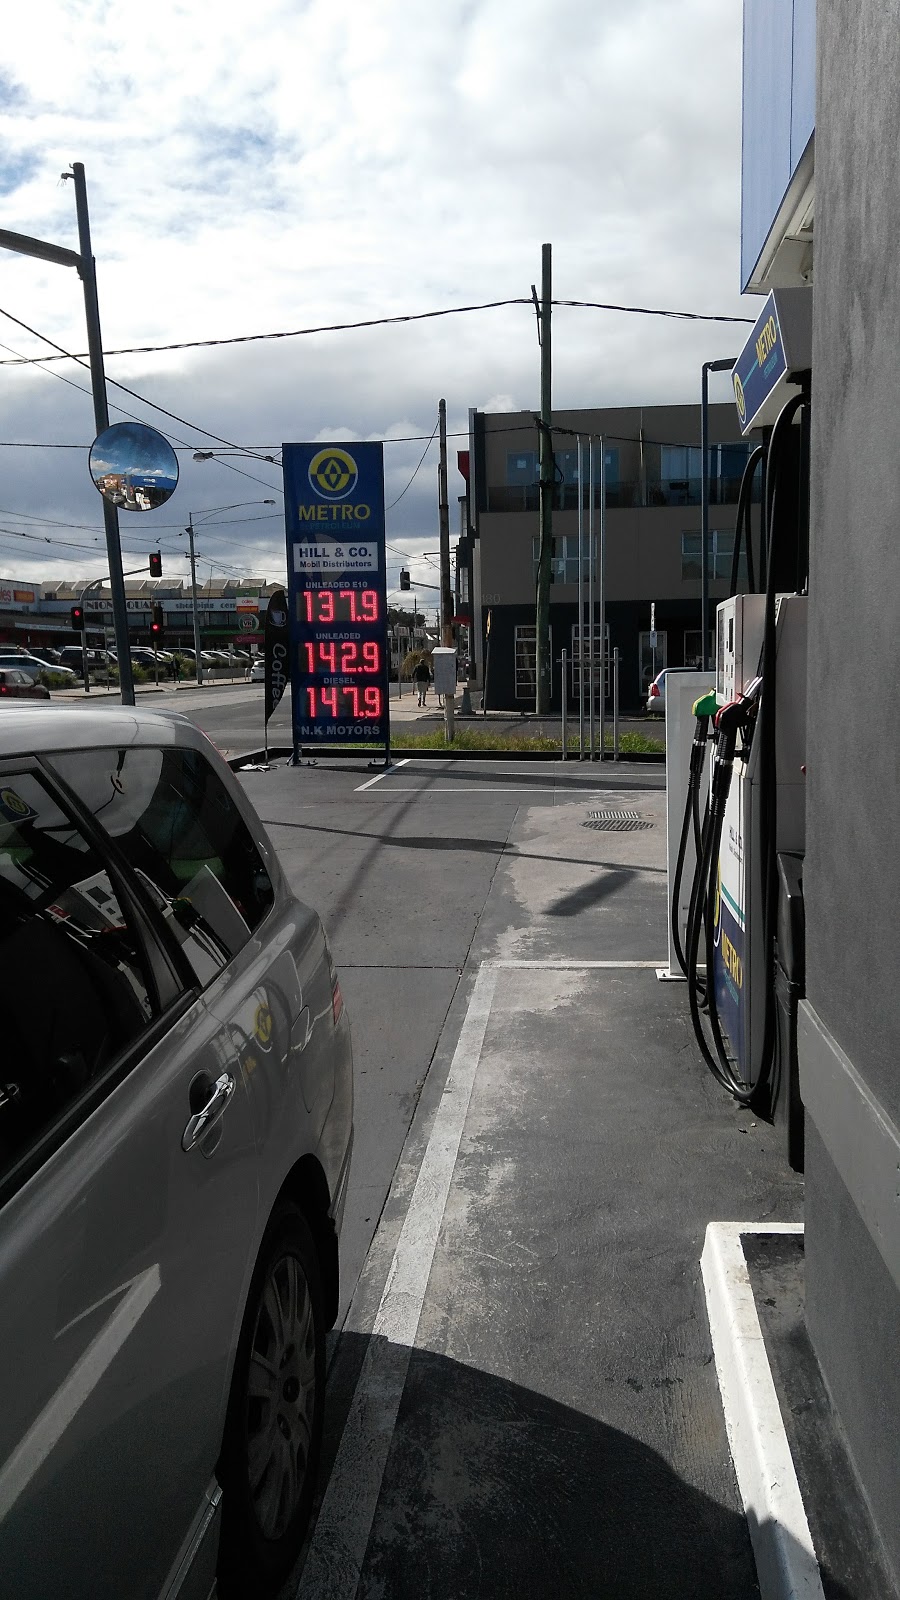 Metro Petroleum | gas station | 157 Union St, Brunswick West VIC 3055, Australia | 1300888800 OR +61 1300 888 800